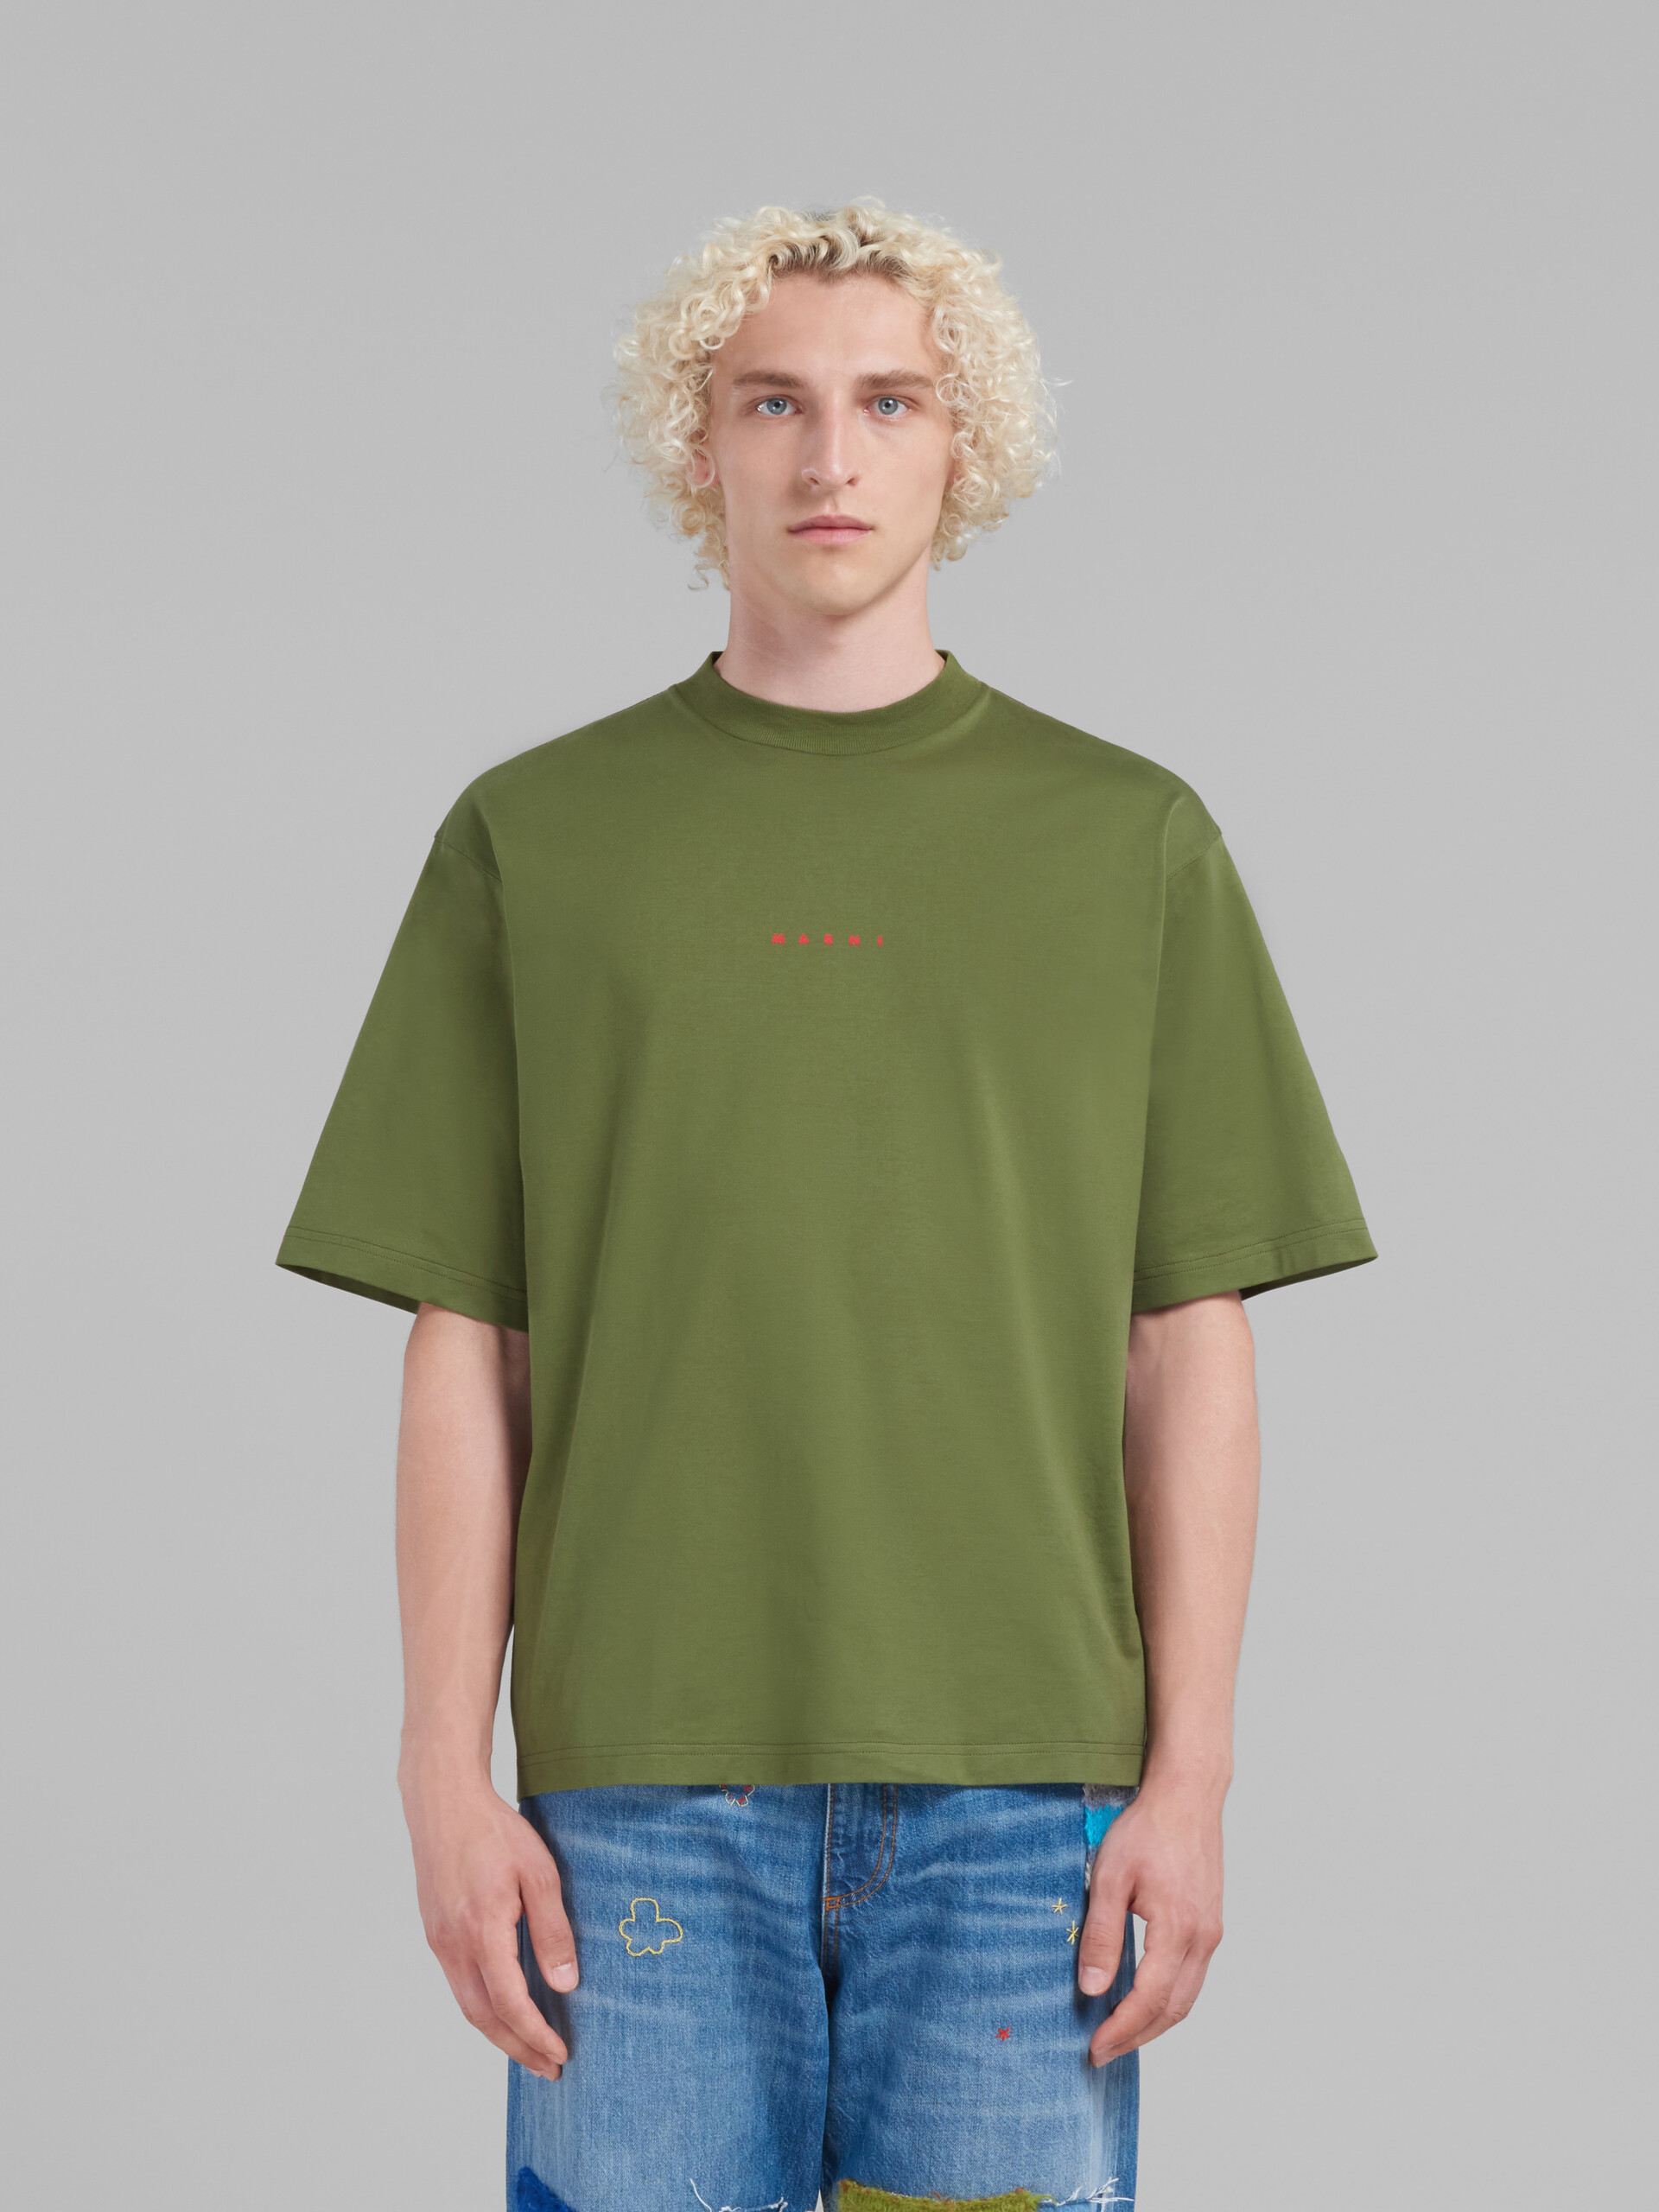 Green organic cotton T-shirt with logo - T-shirts - Image 2